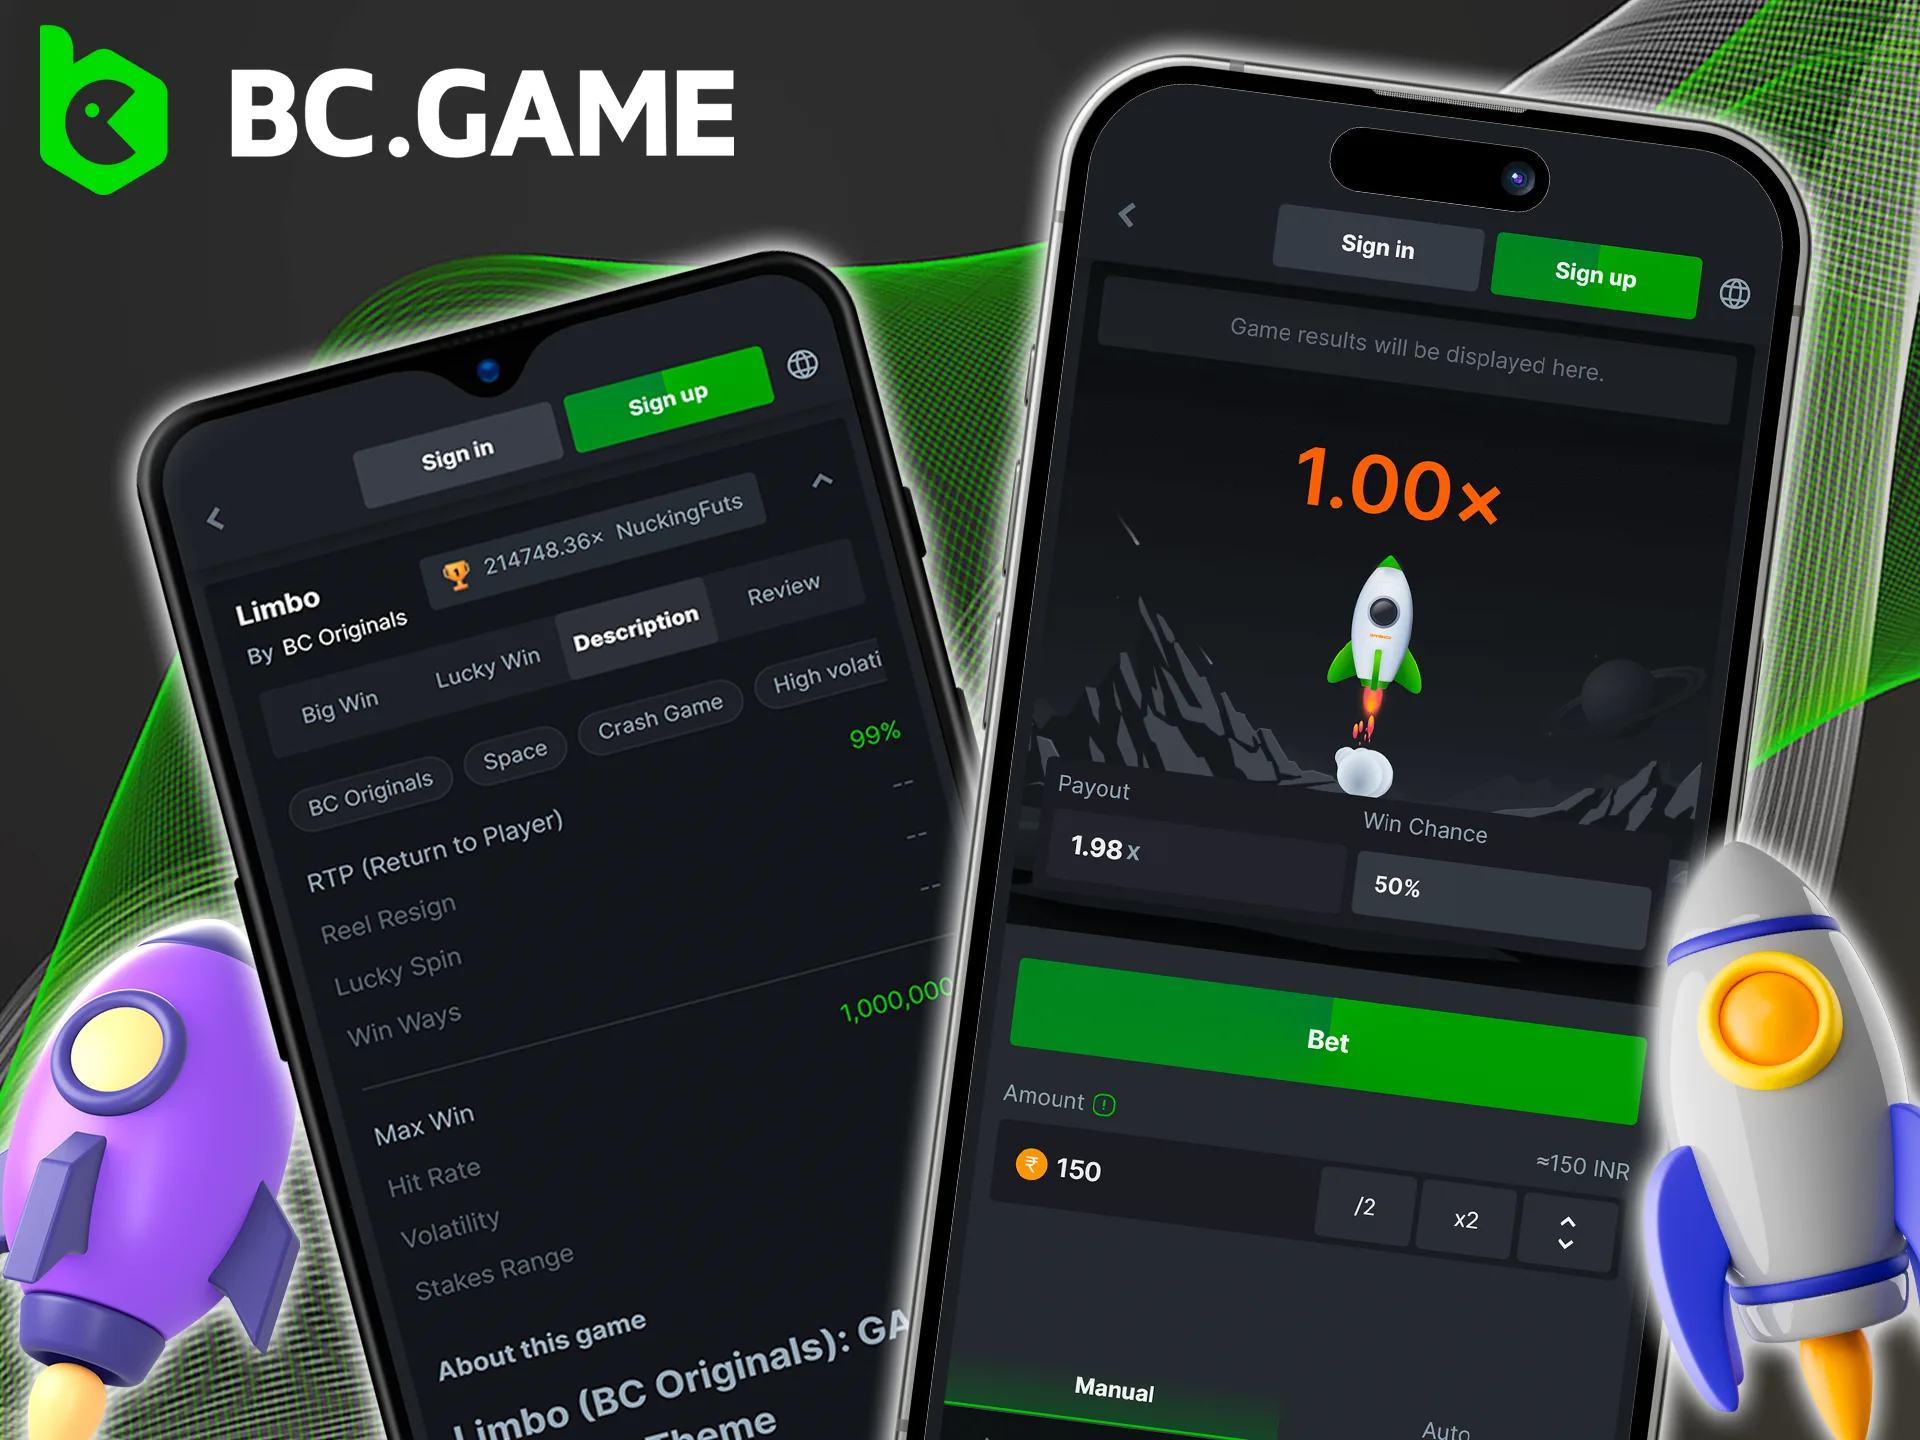 Play Limbo via the BC Game mobile app.